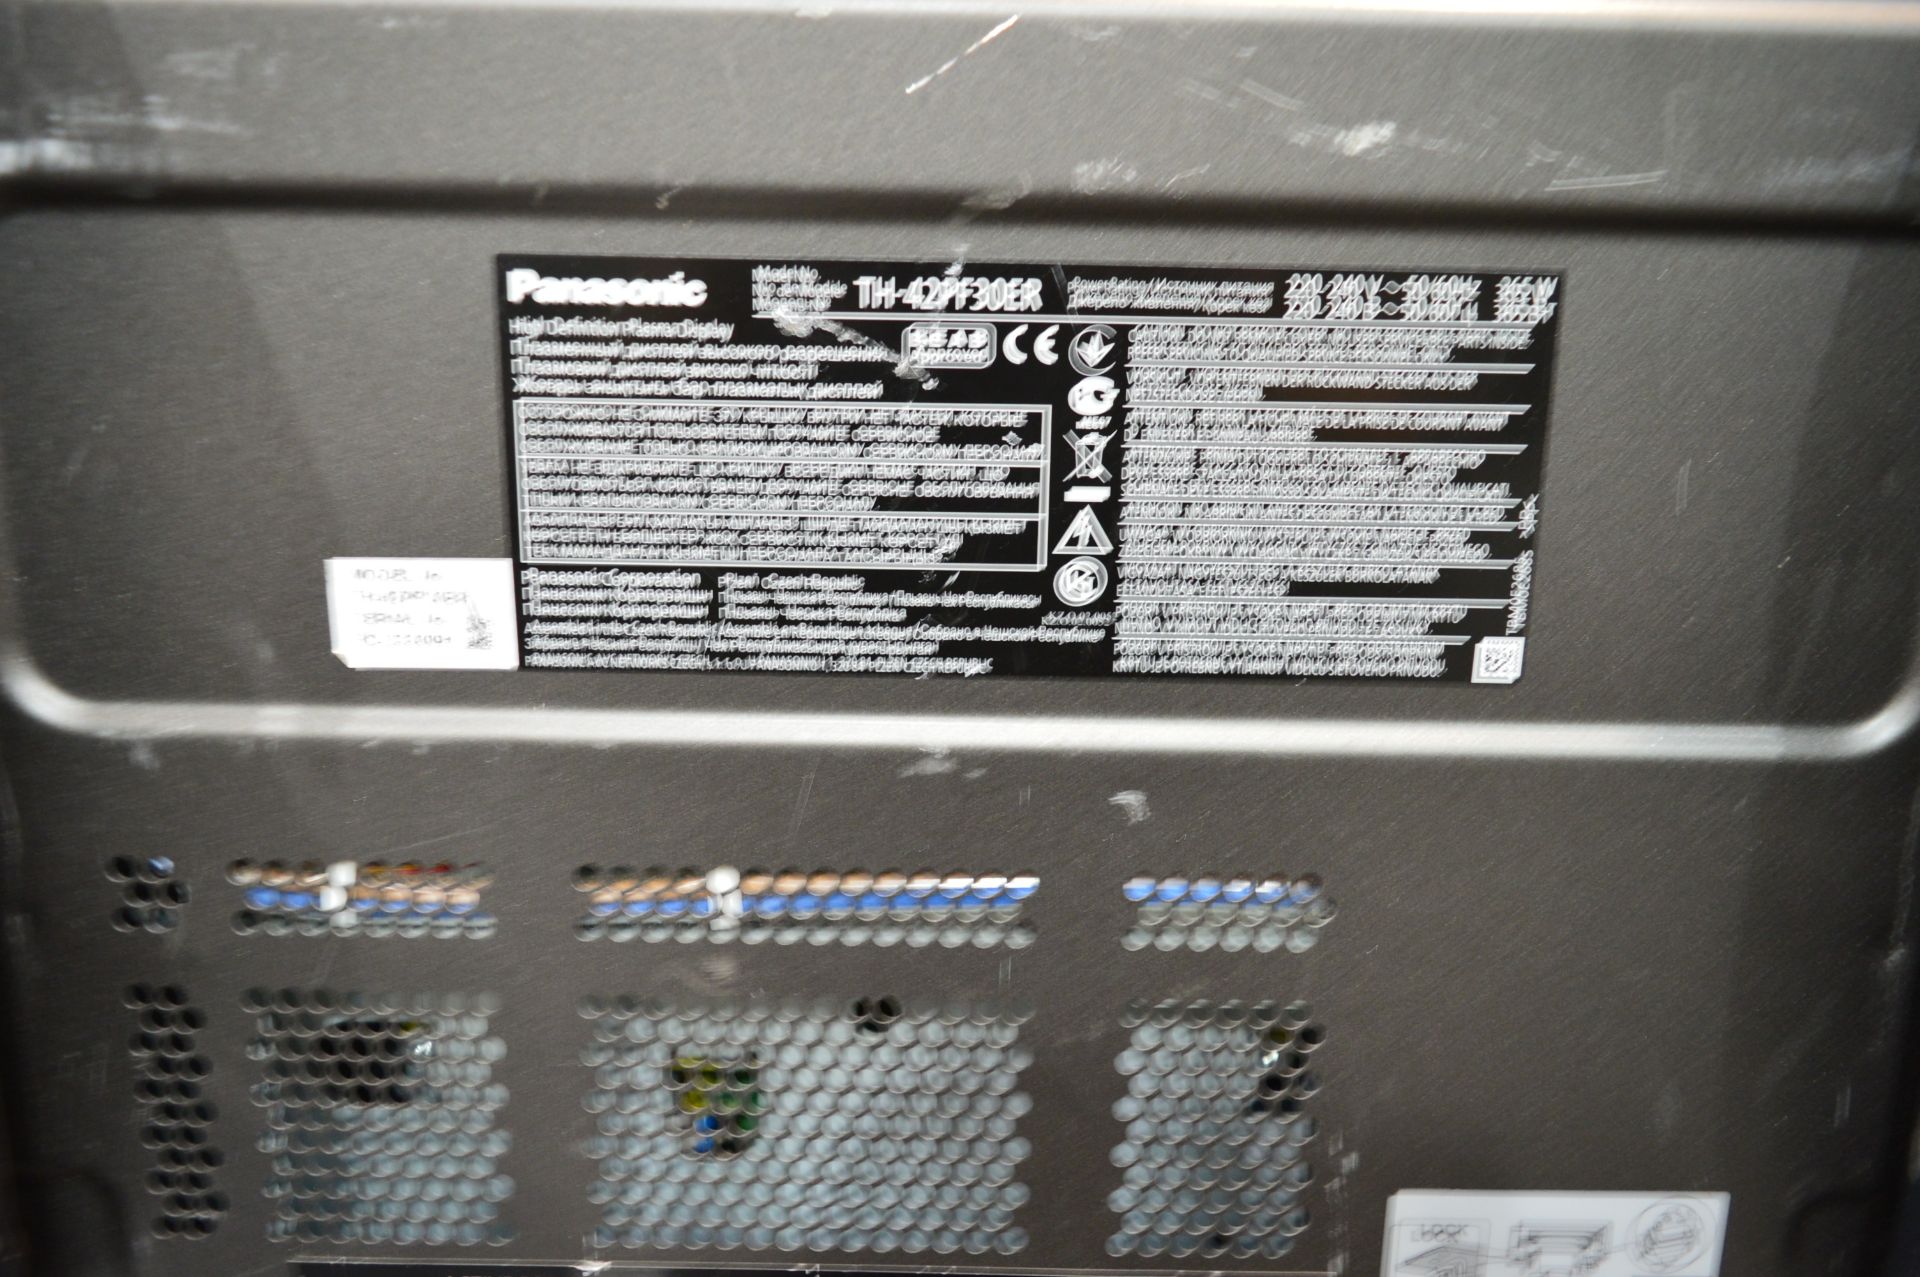 Panasonic, 42" Plasma Display, Model TH-42PF30ER, - Image 2 of 4